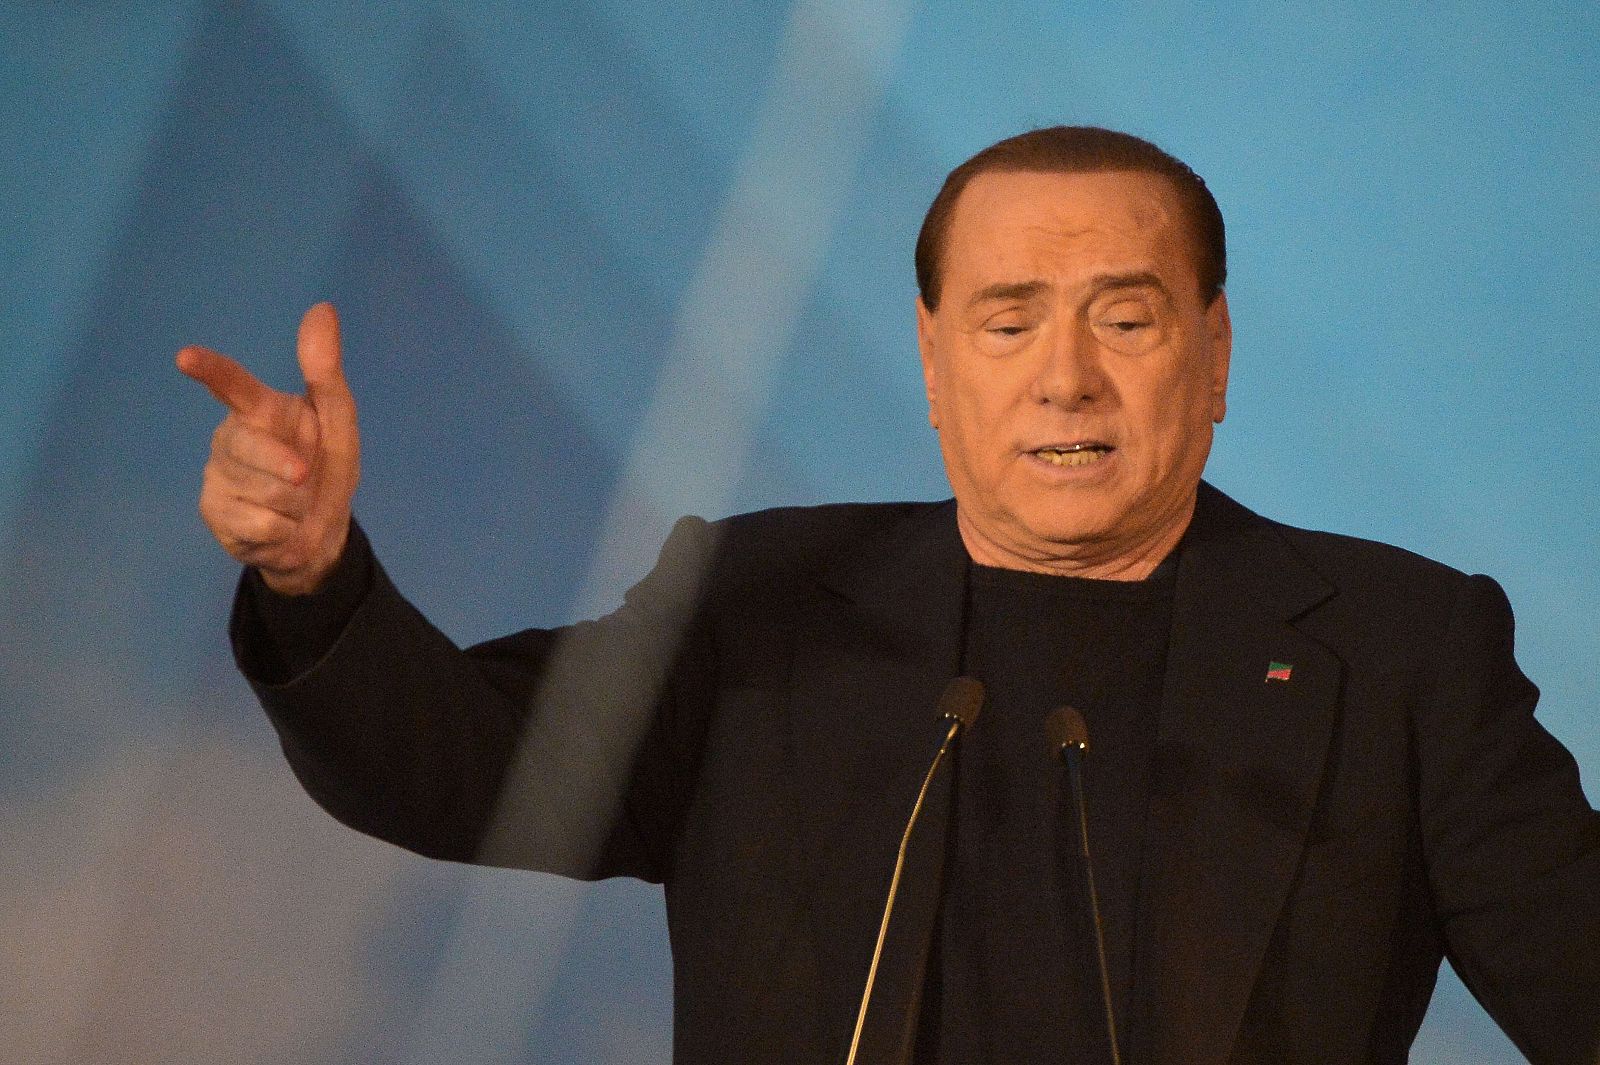 El ex primer ministro, Silvio Berlusconi, dirigiéndose a sus simpatizantes